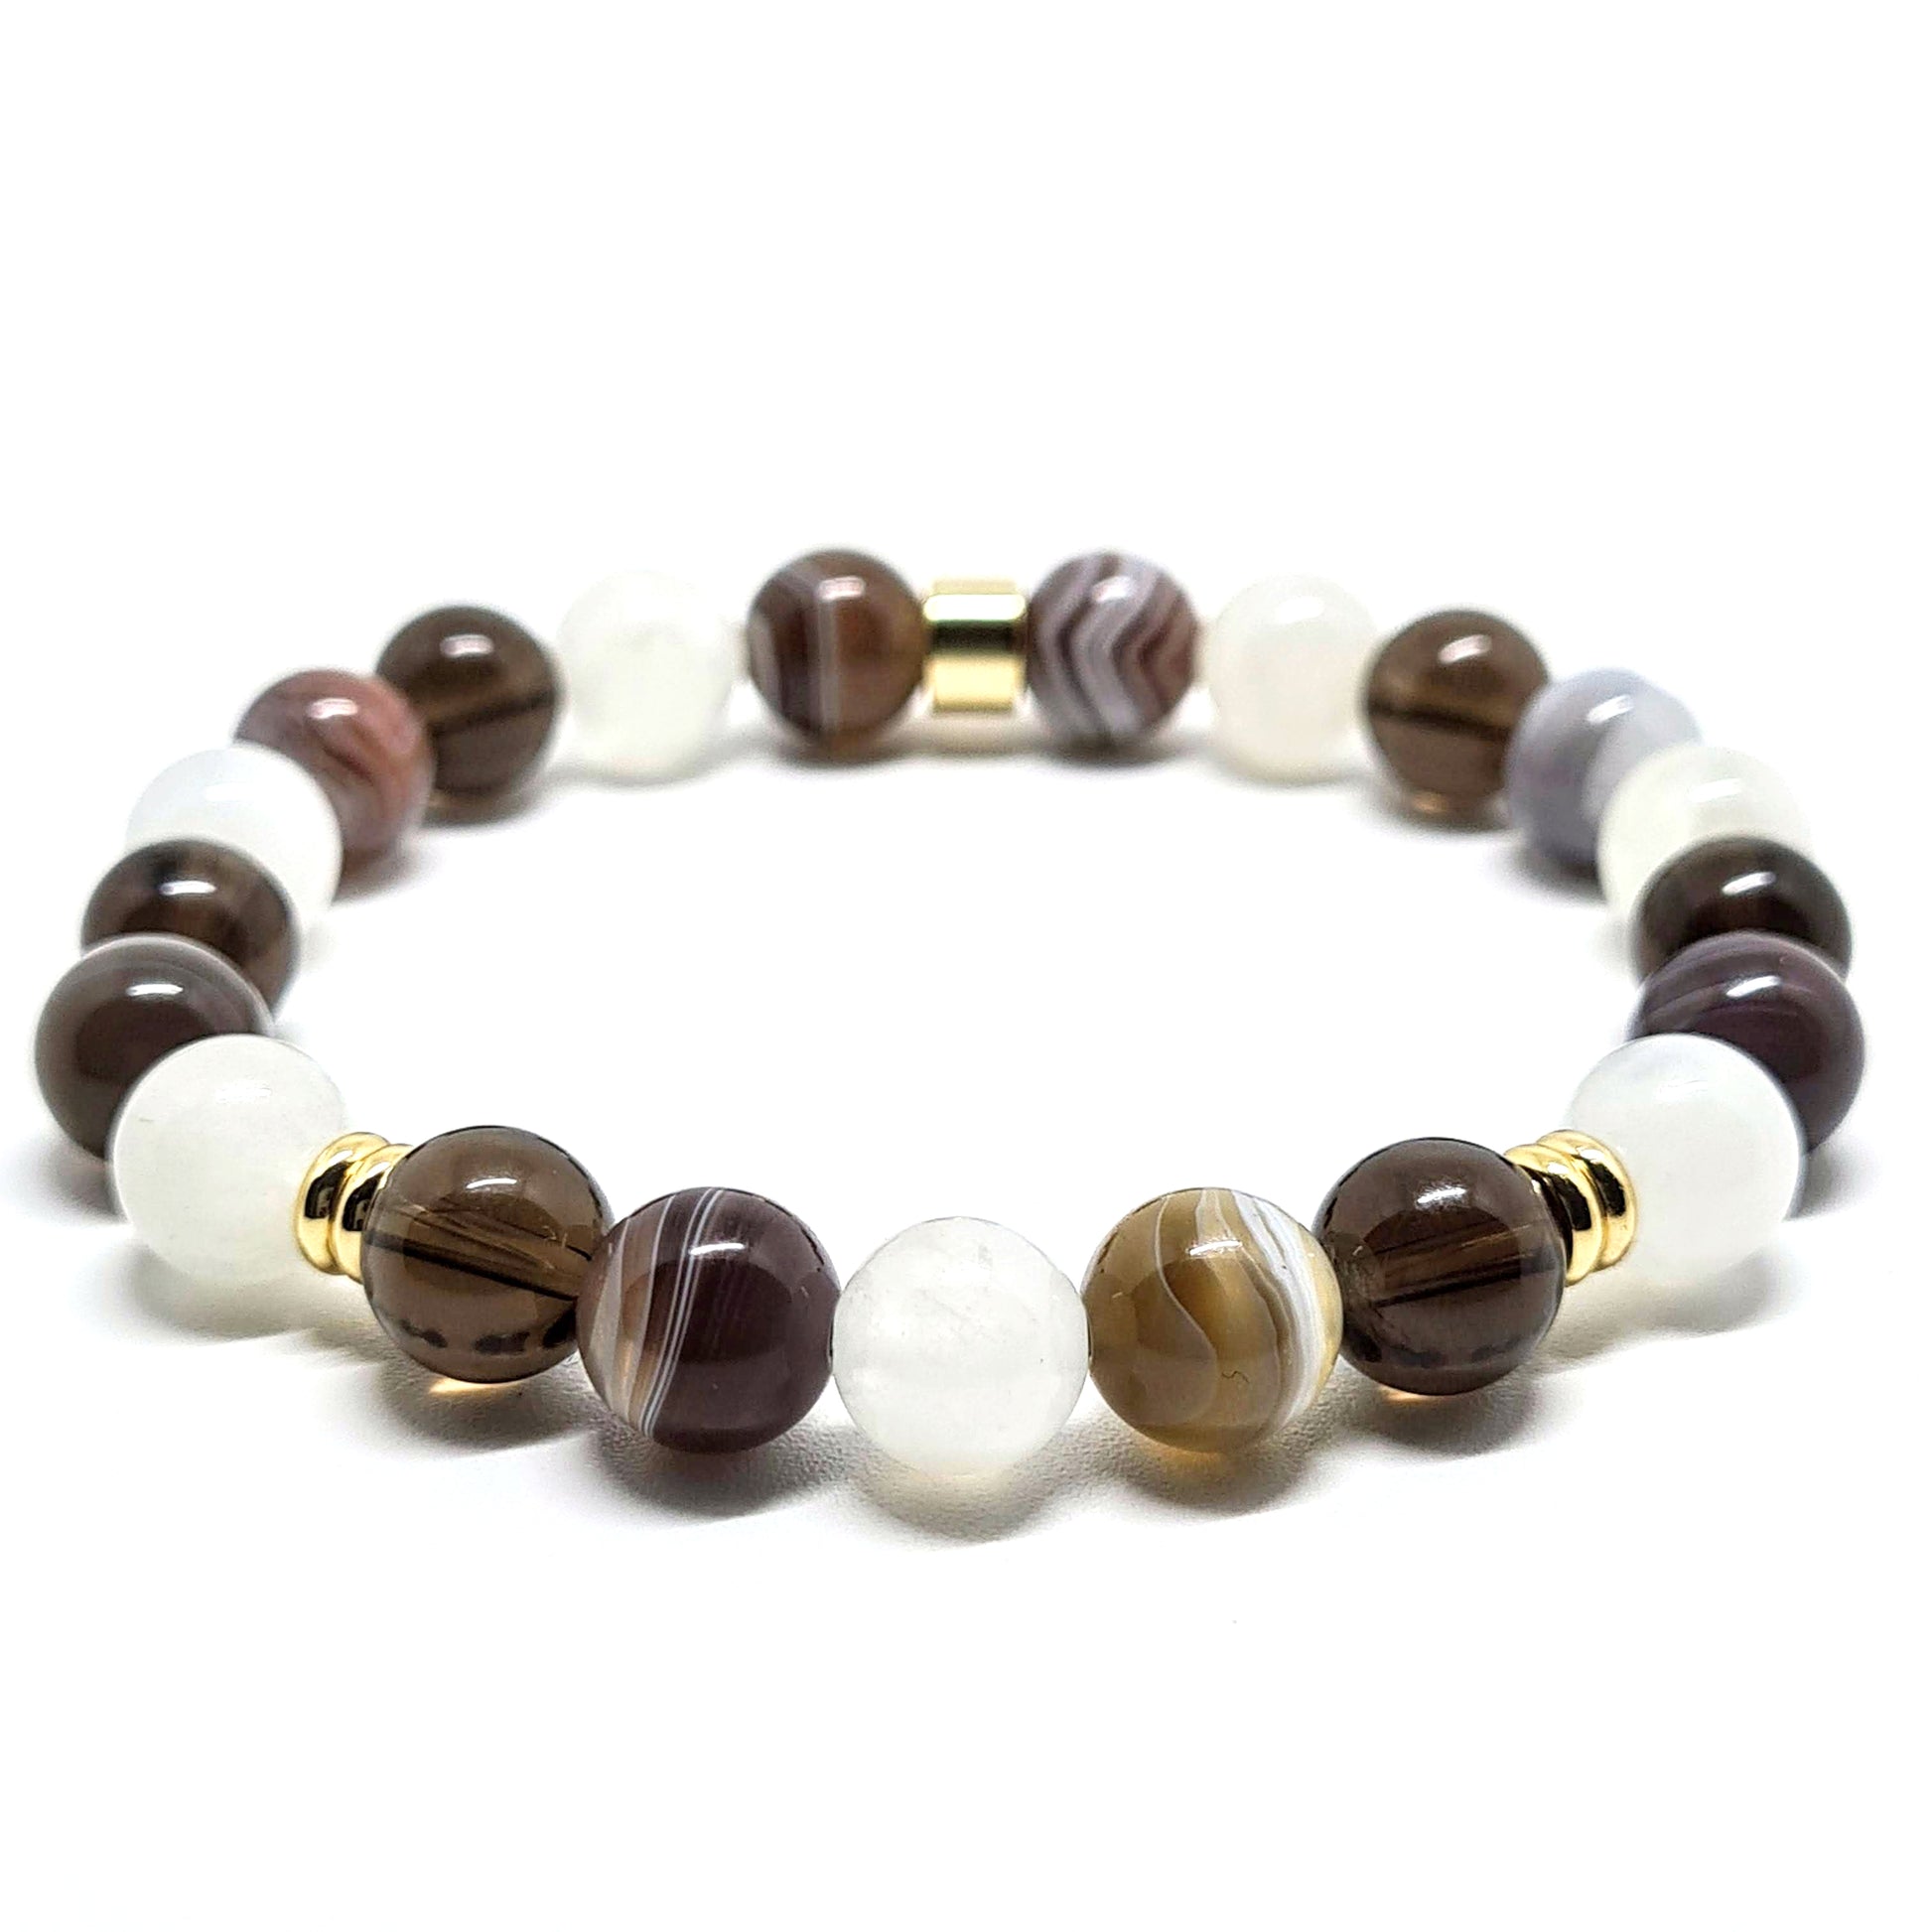 Botswana Agate, Smoky quartz and Moonstone gemstone bracelet with gold accessories